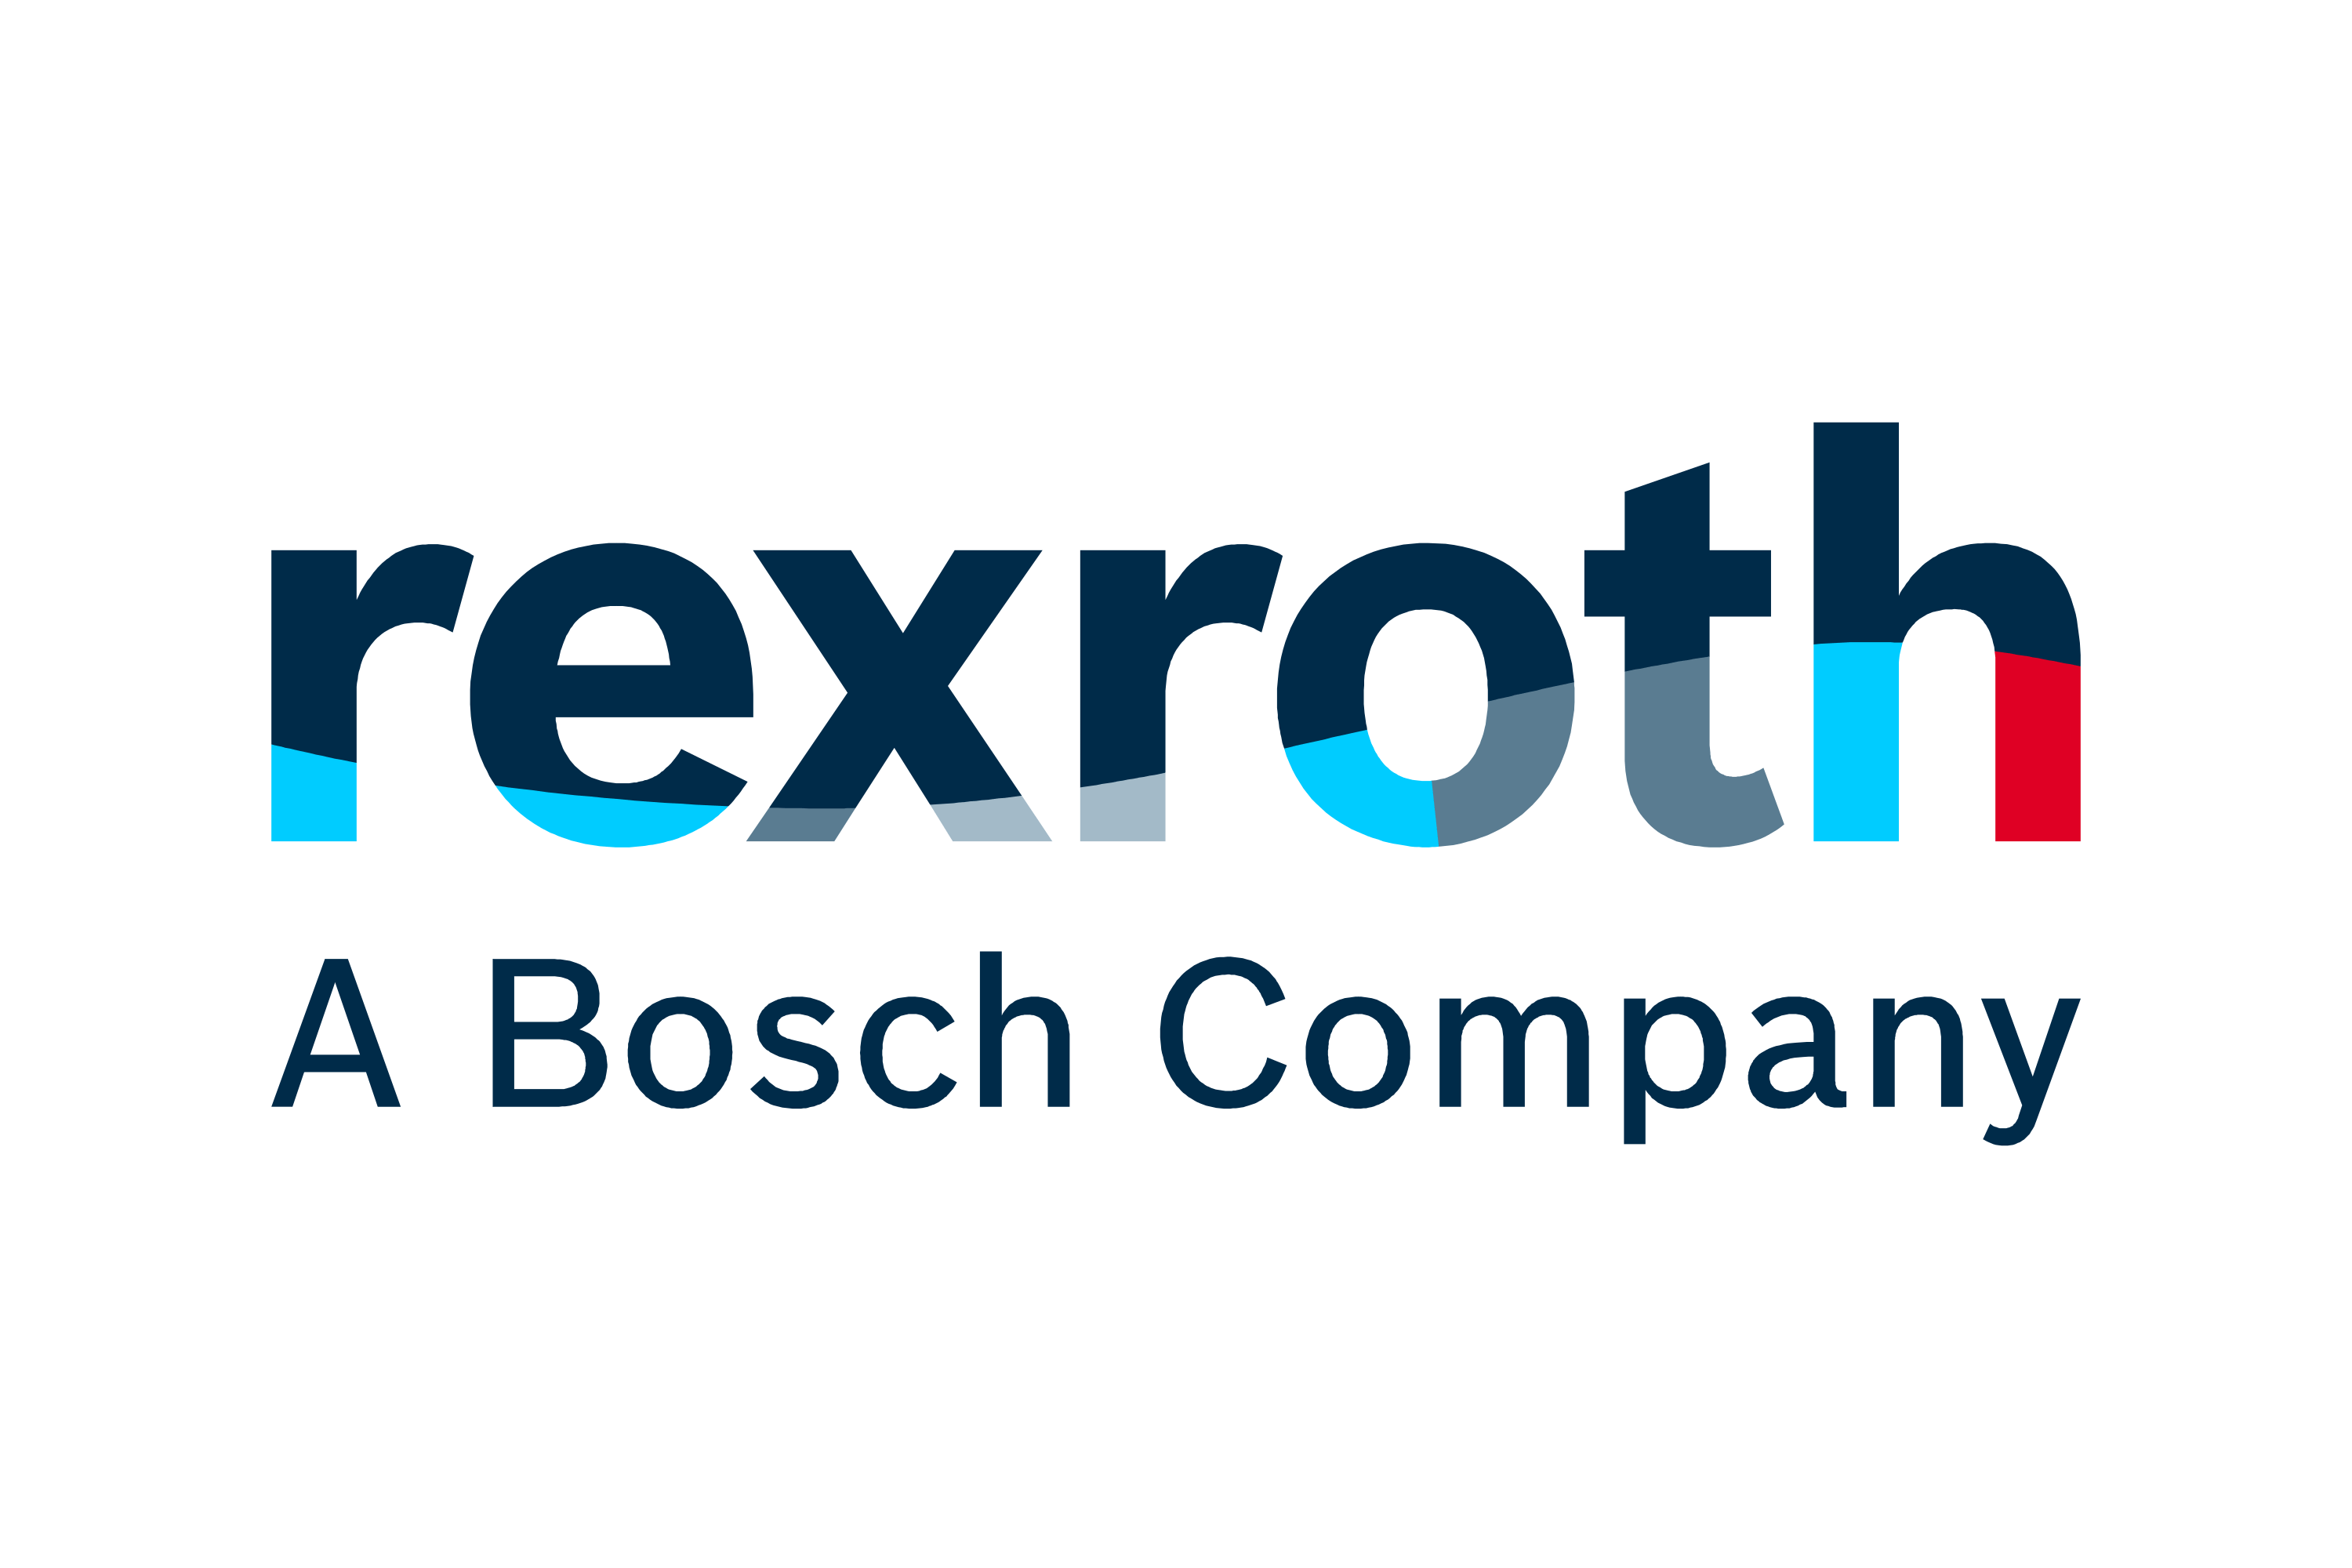 Download Bosch Rexroth Logo in SVG Vector or PNG File Format - Logo.wine